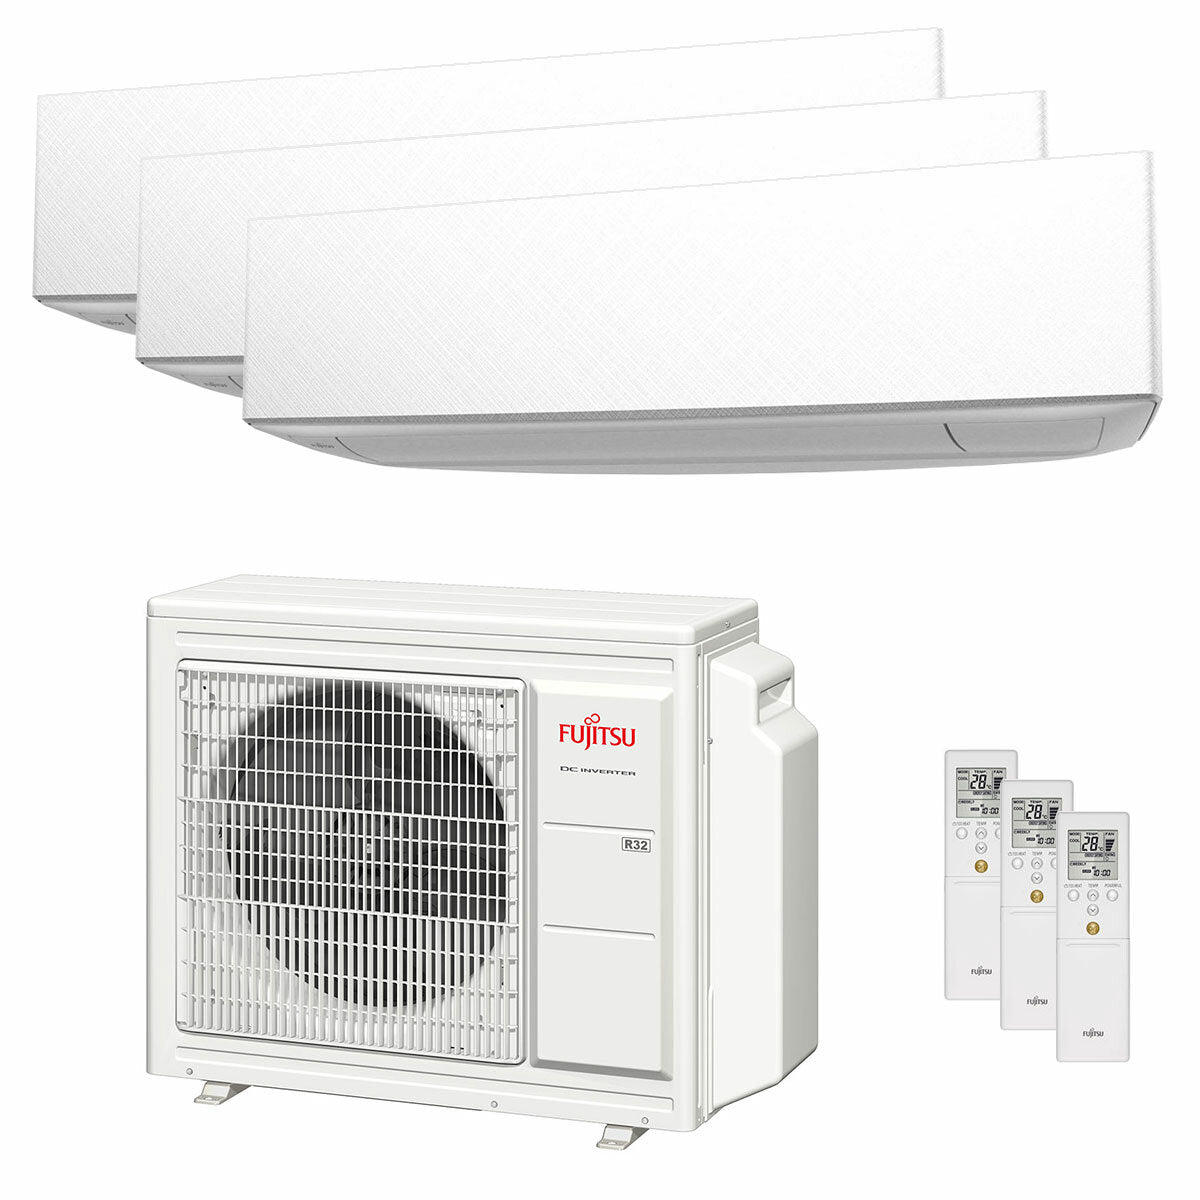 Fujitsu KE WiFi series trial split air conditioner 7000+9000+9000 BTU inverter A+++ wifi external unit 5.4 kW